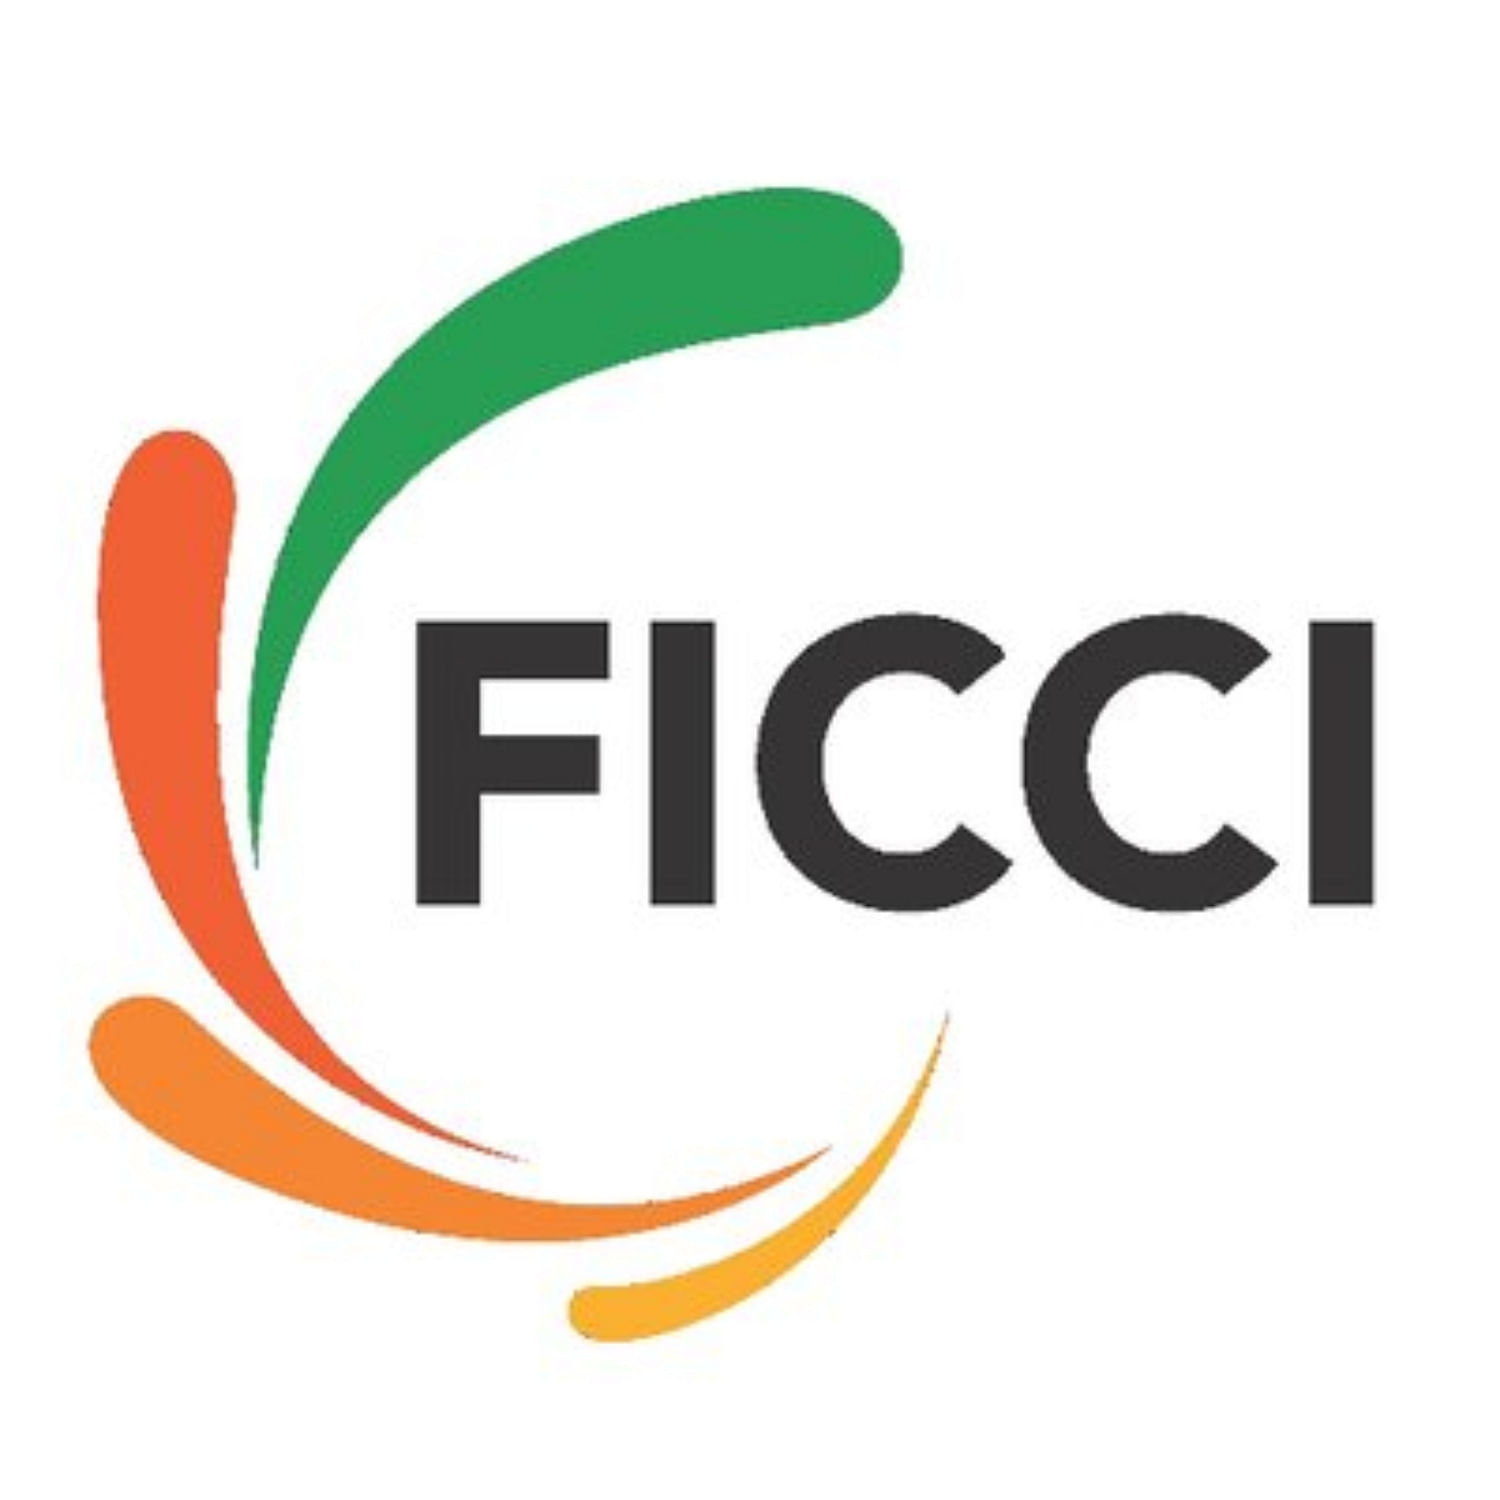 Representative image/Credit: Ficci website/http://ficci.in